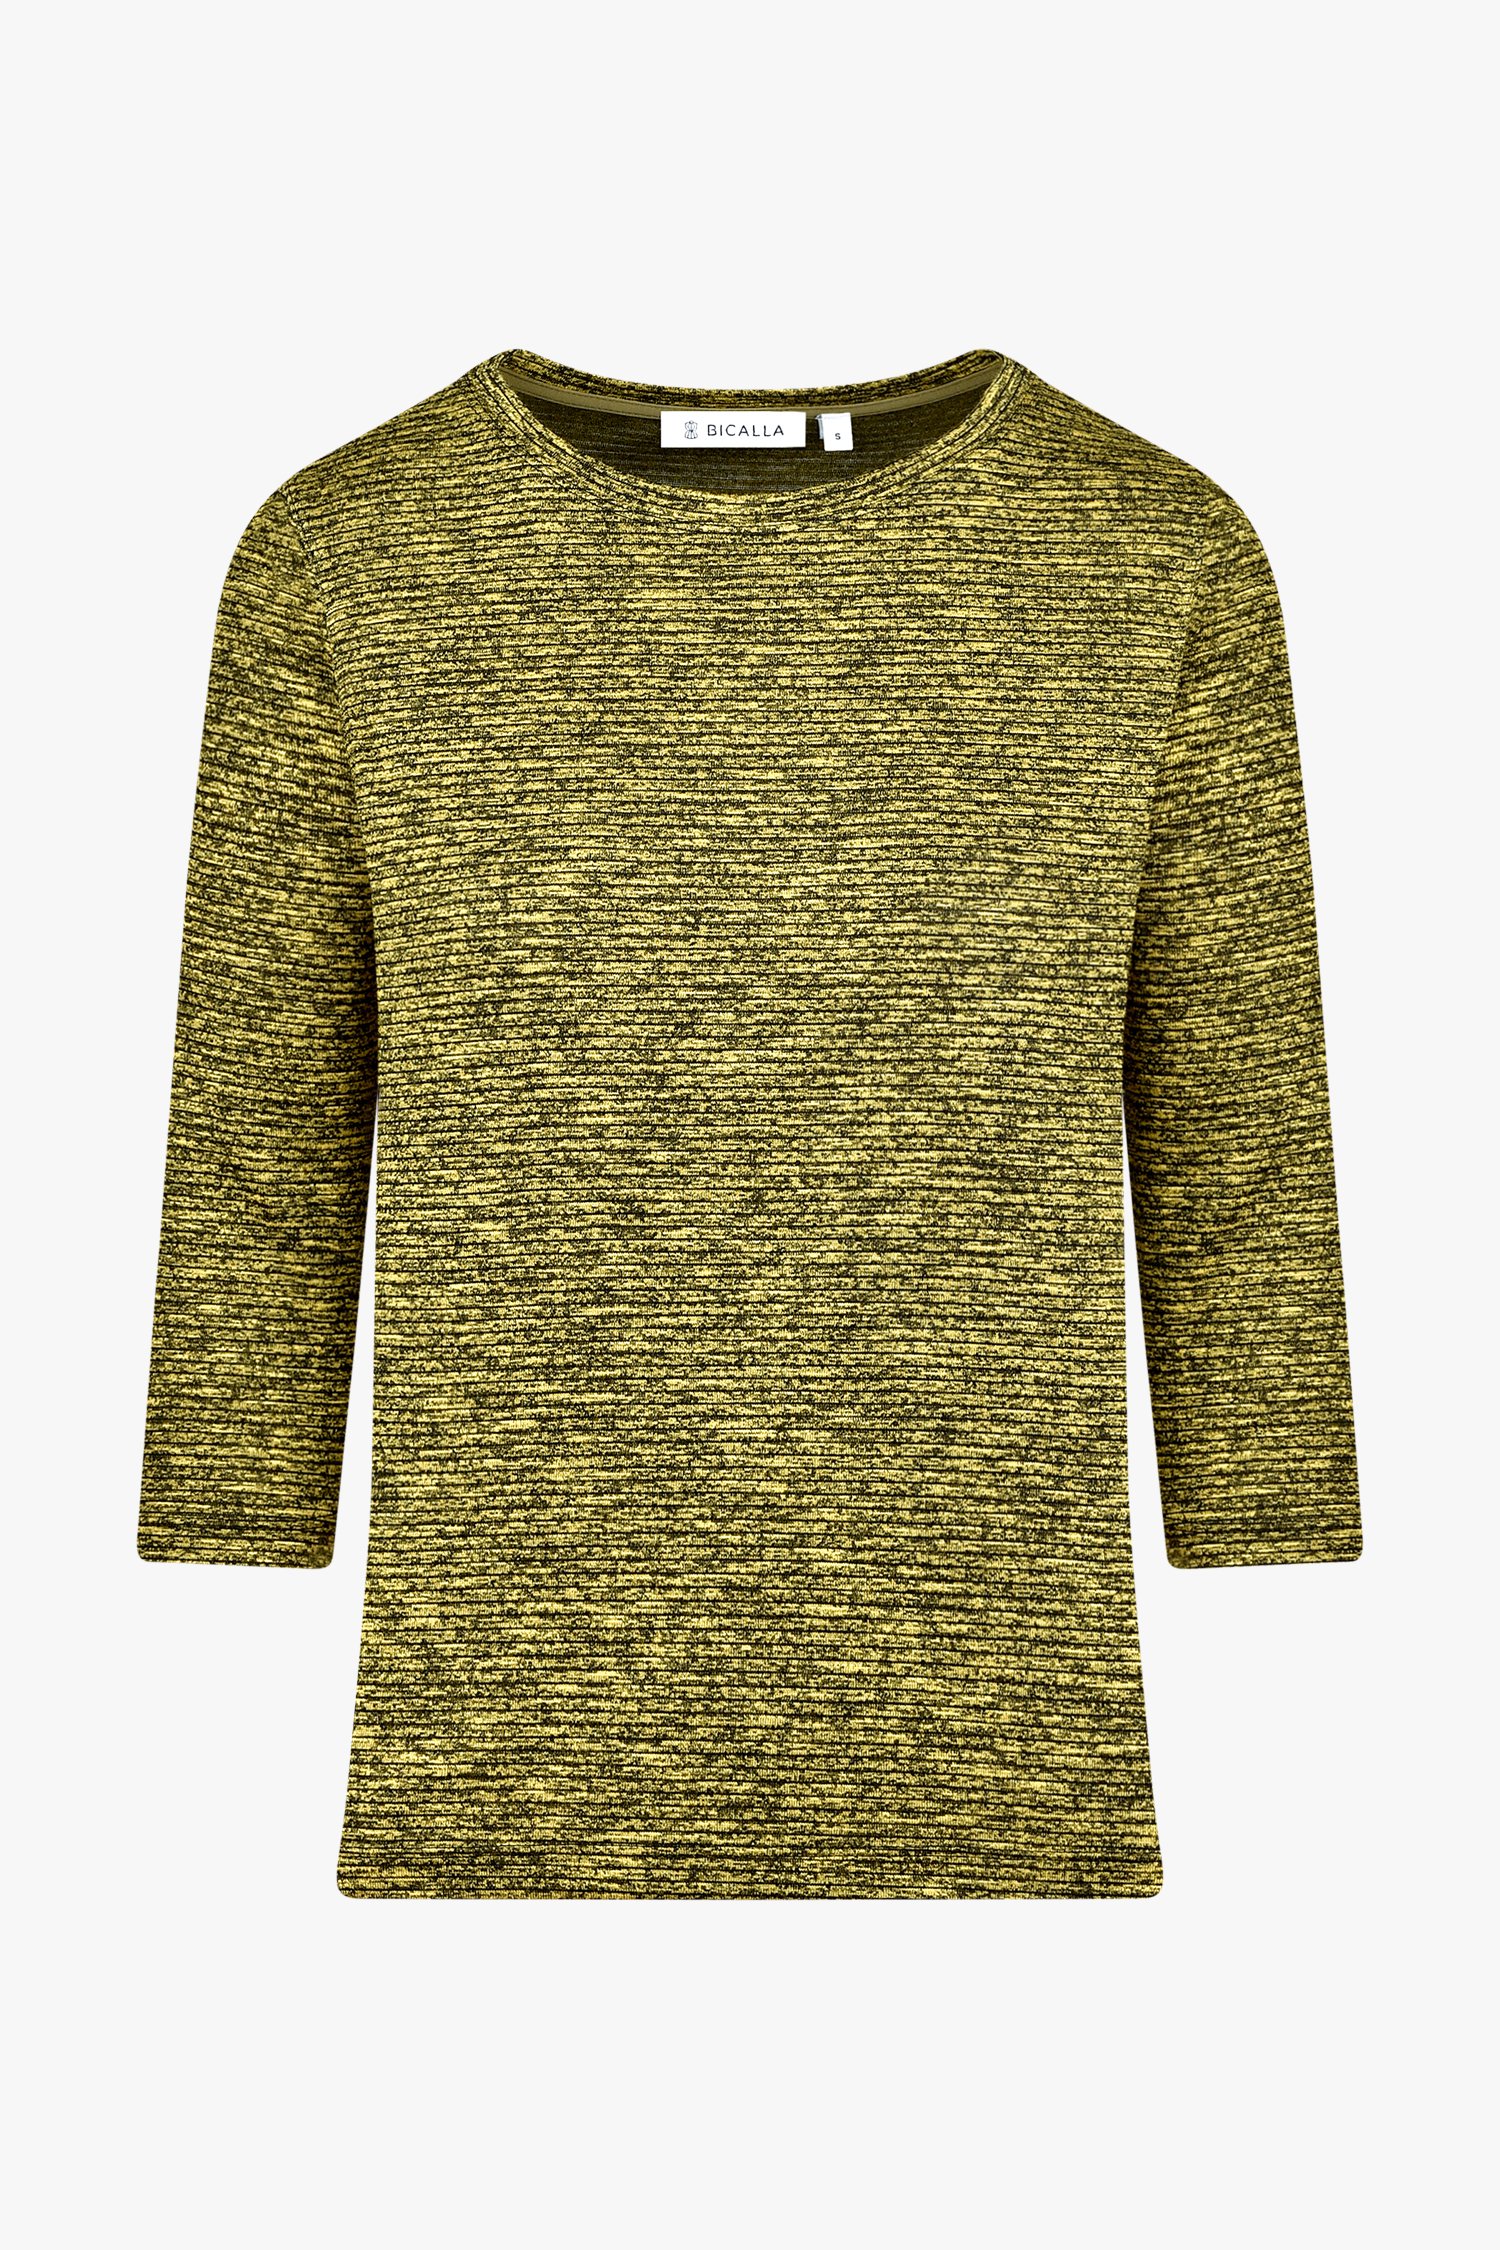 Zwart-gele geribte T-shirt van Bicalla voor Dames